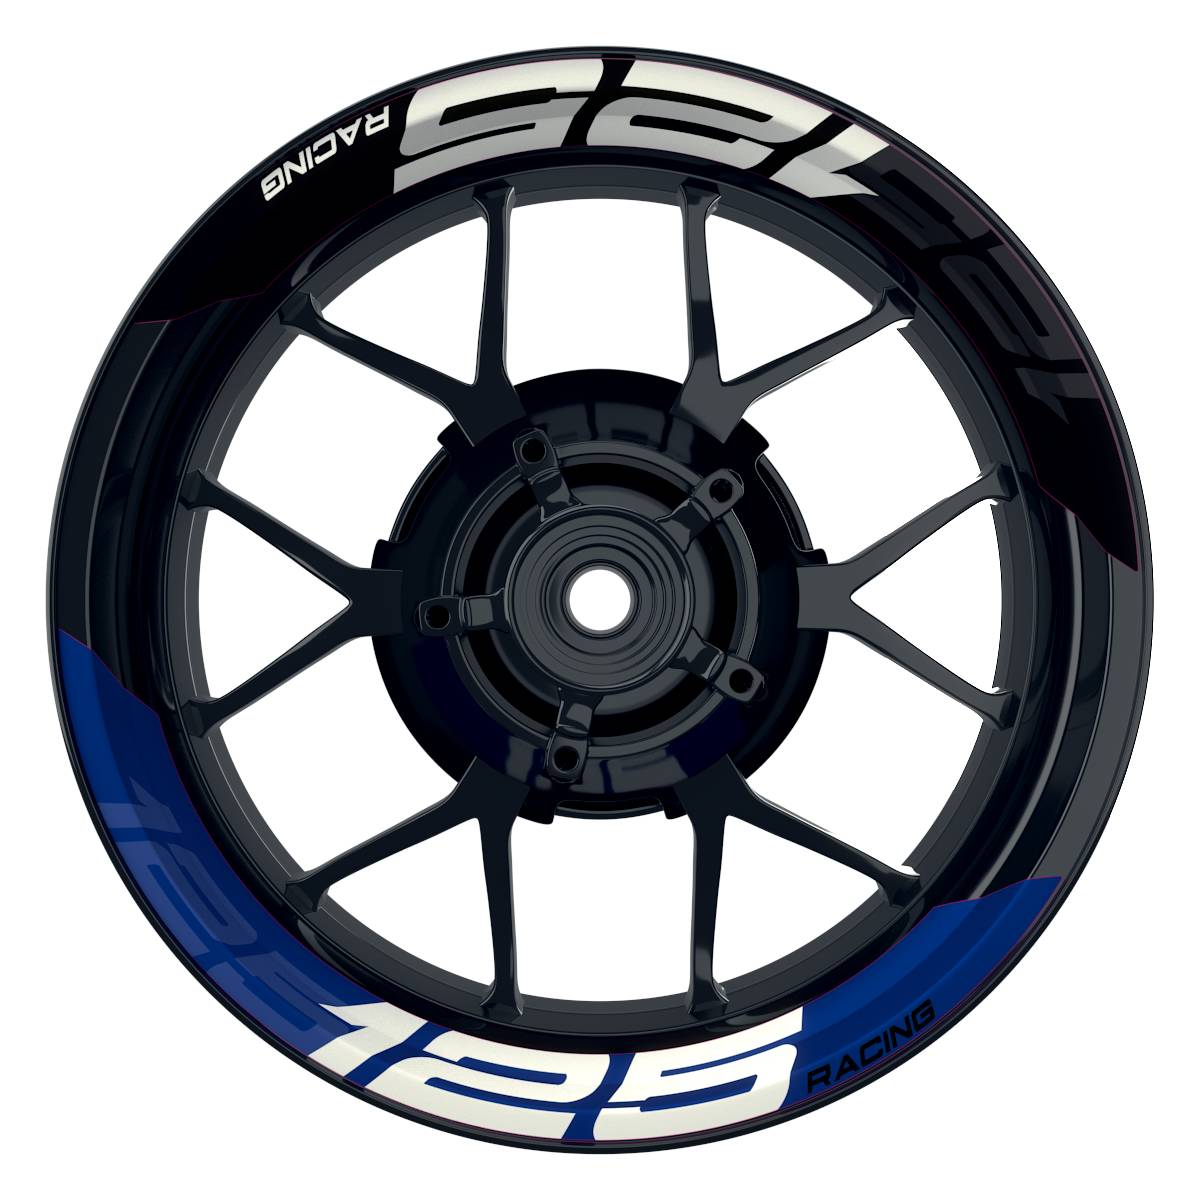 Wheelsticker Felgenaufkleber KTM Racing 125 halb halb V2 schwarz blau Frontansicht